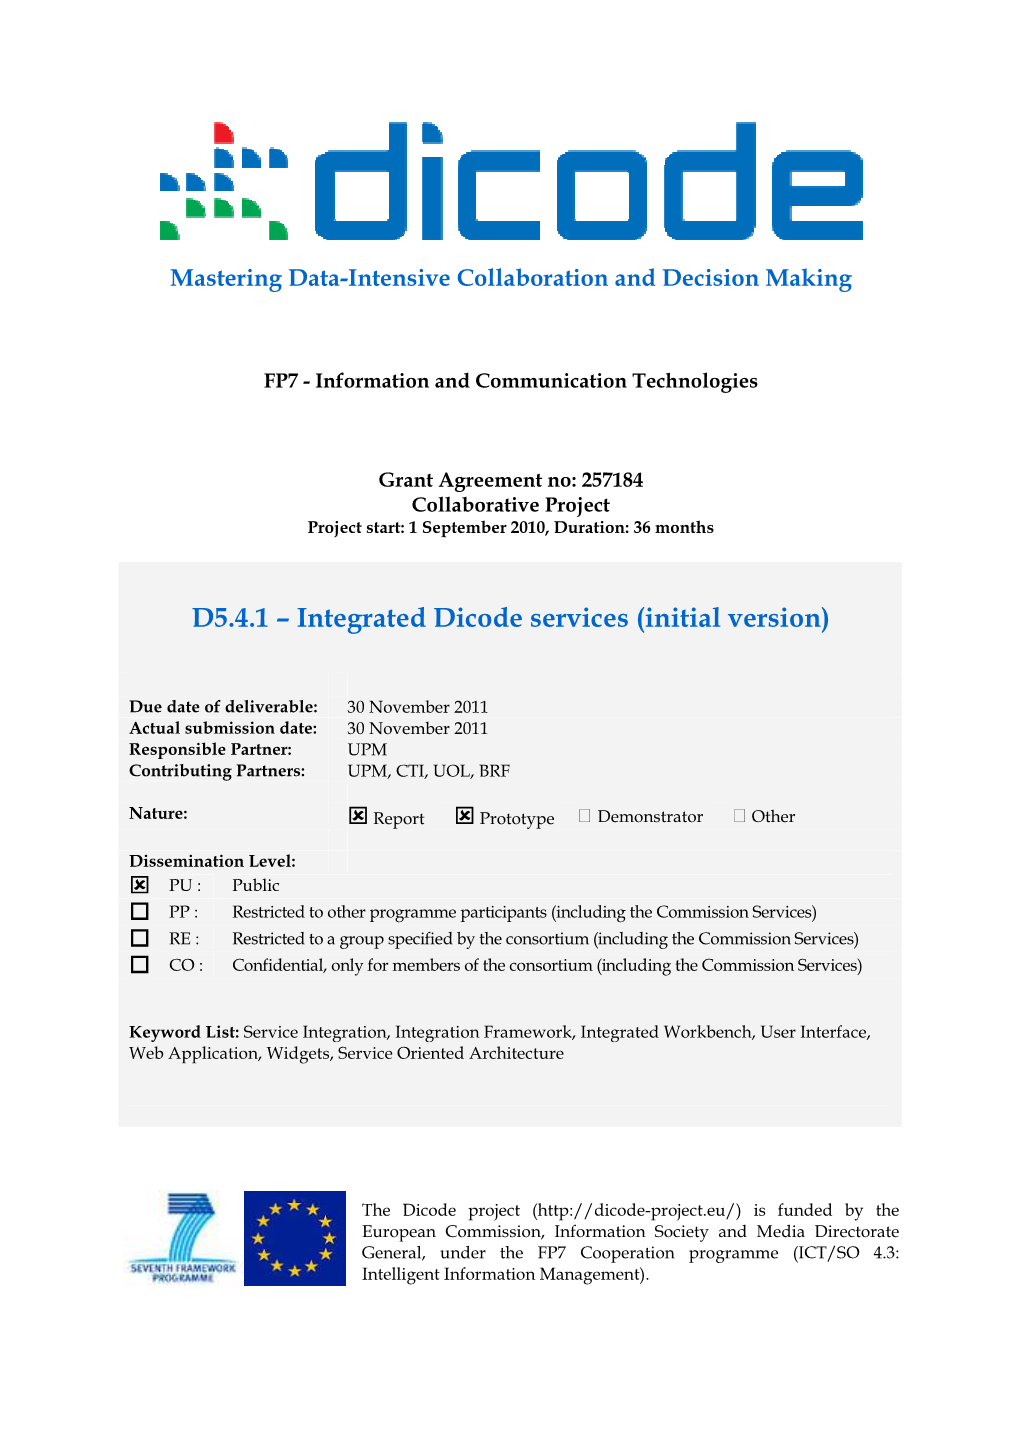 D5.4.1-Integrated Dicode Services V5 EC